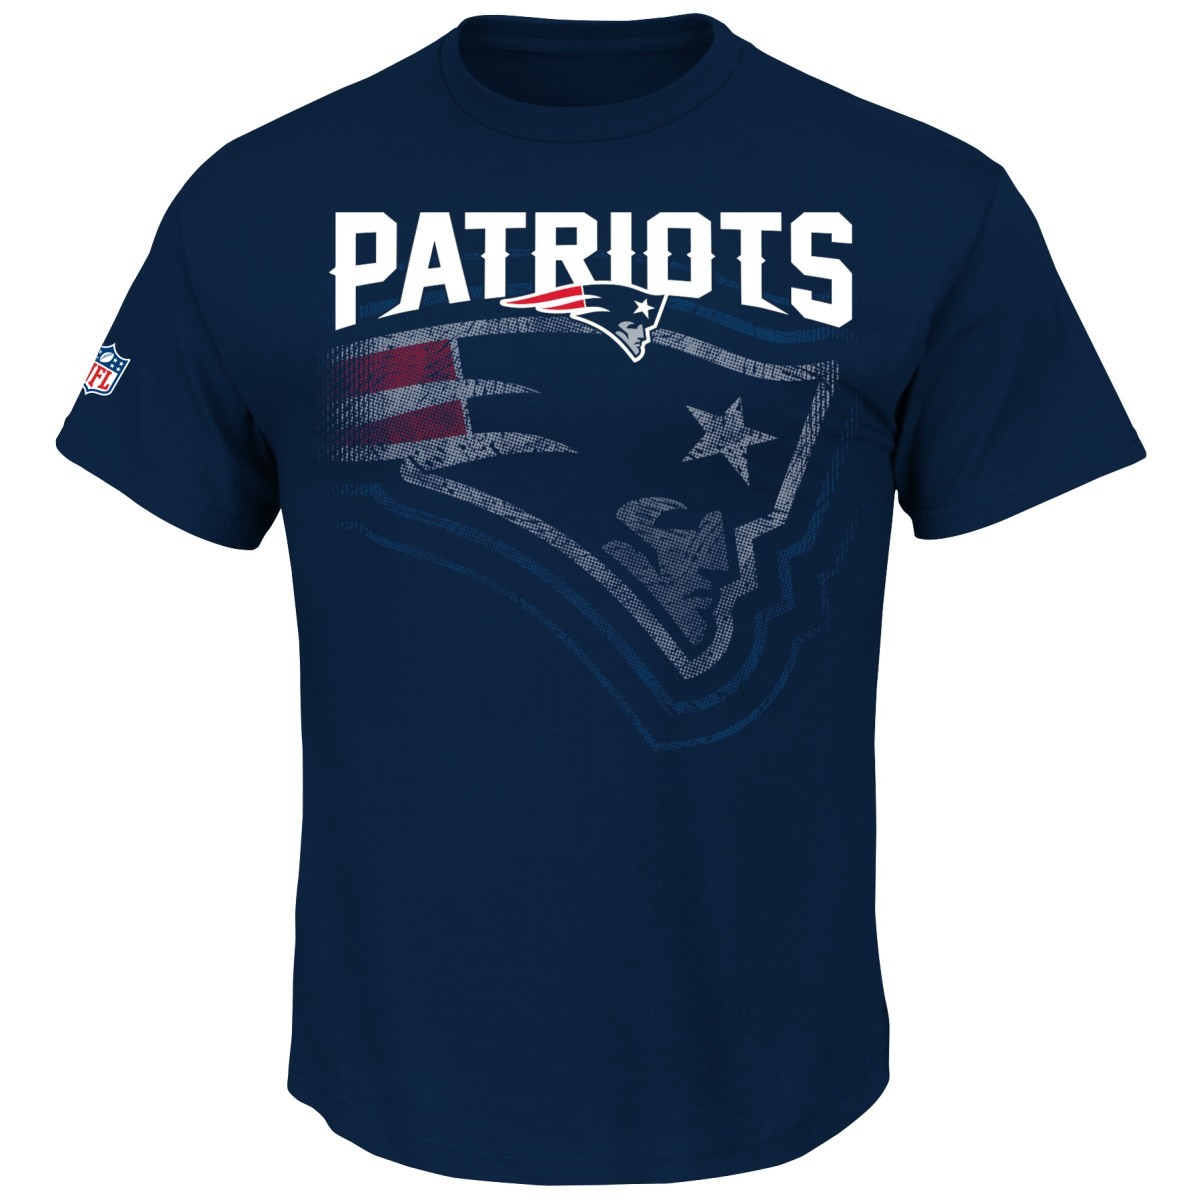 Buy Majestic NFL RAIYNA Shirt - New England Patriots navy